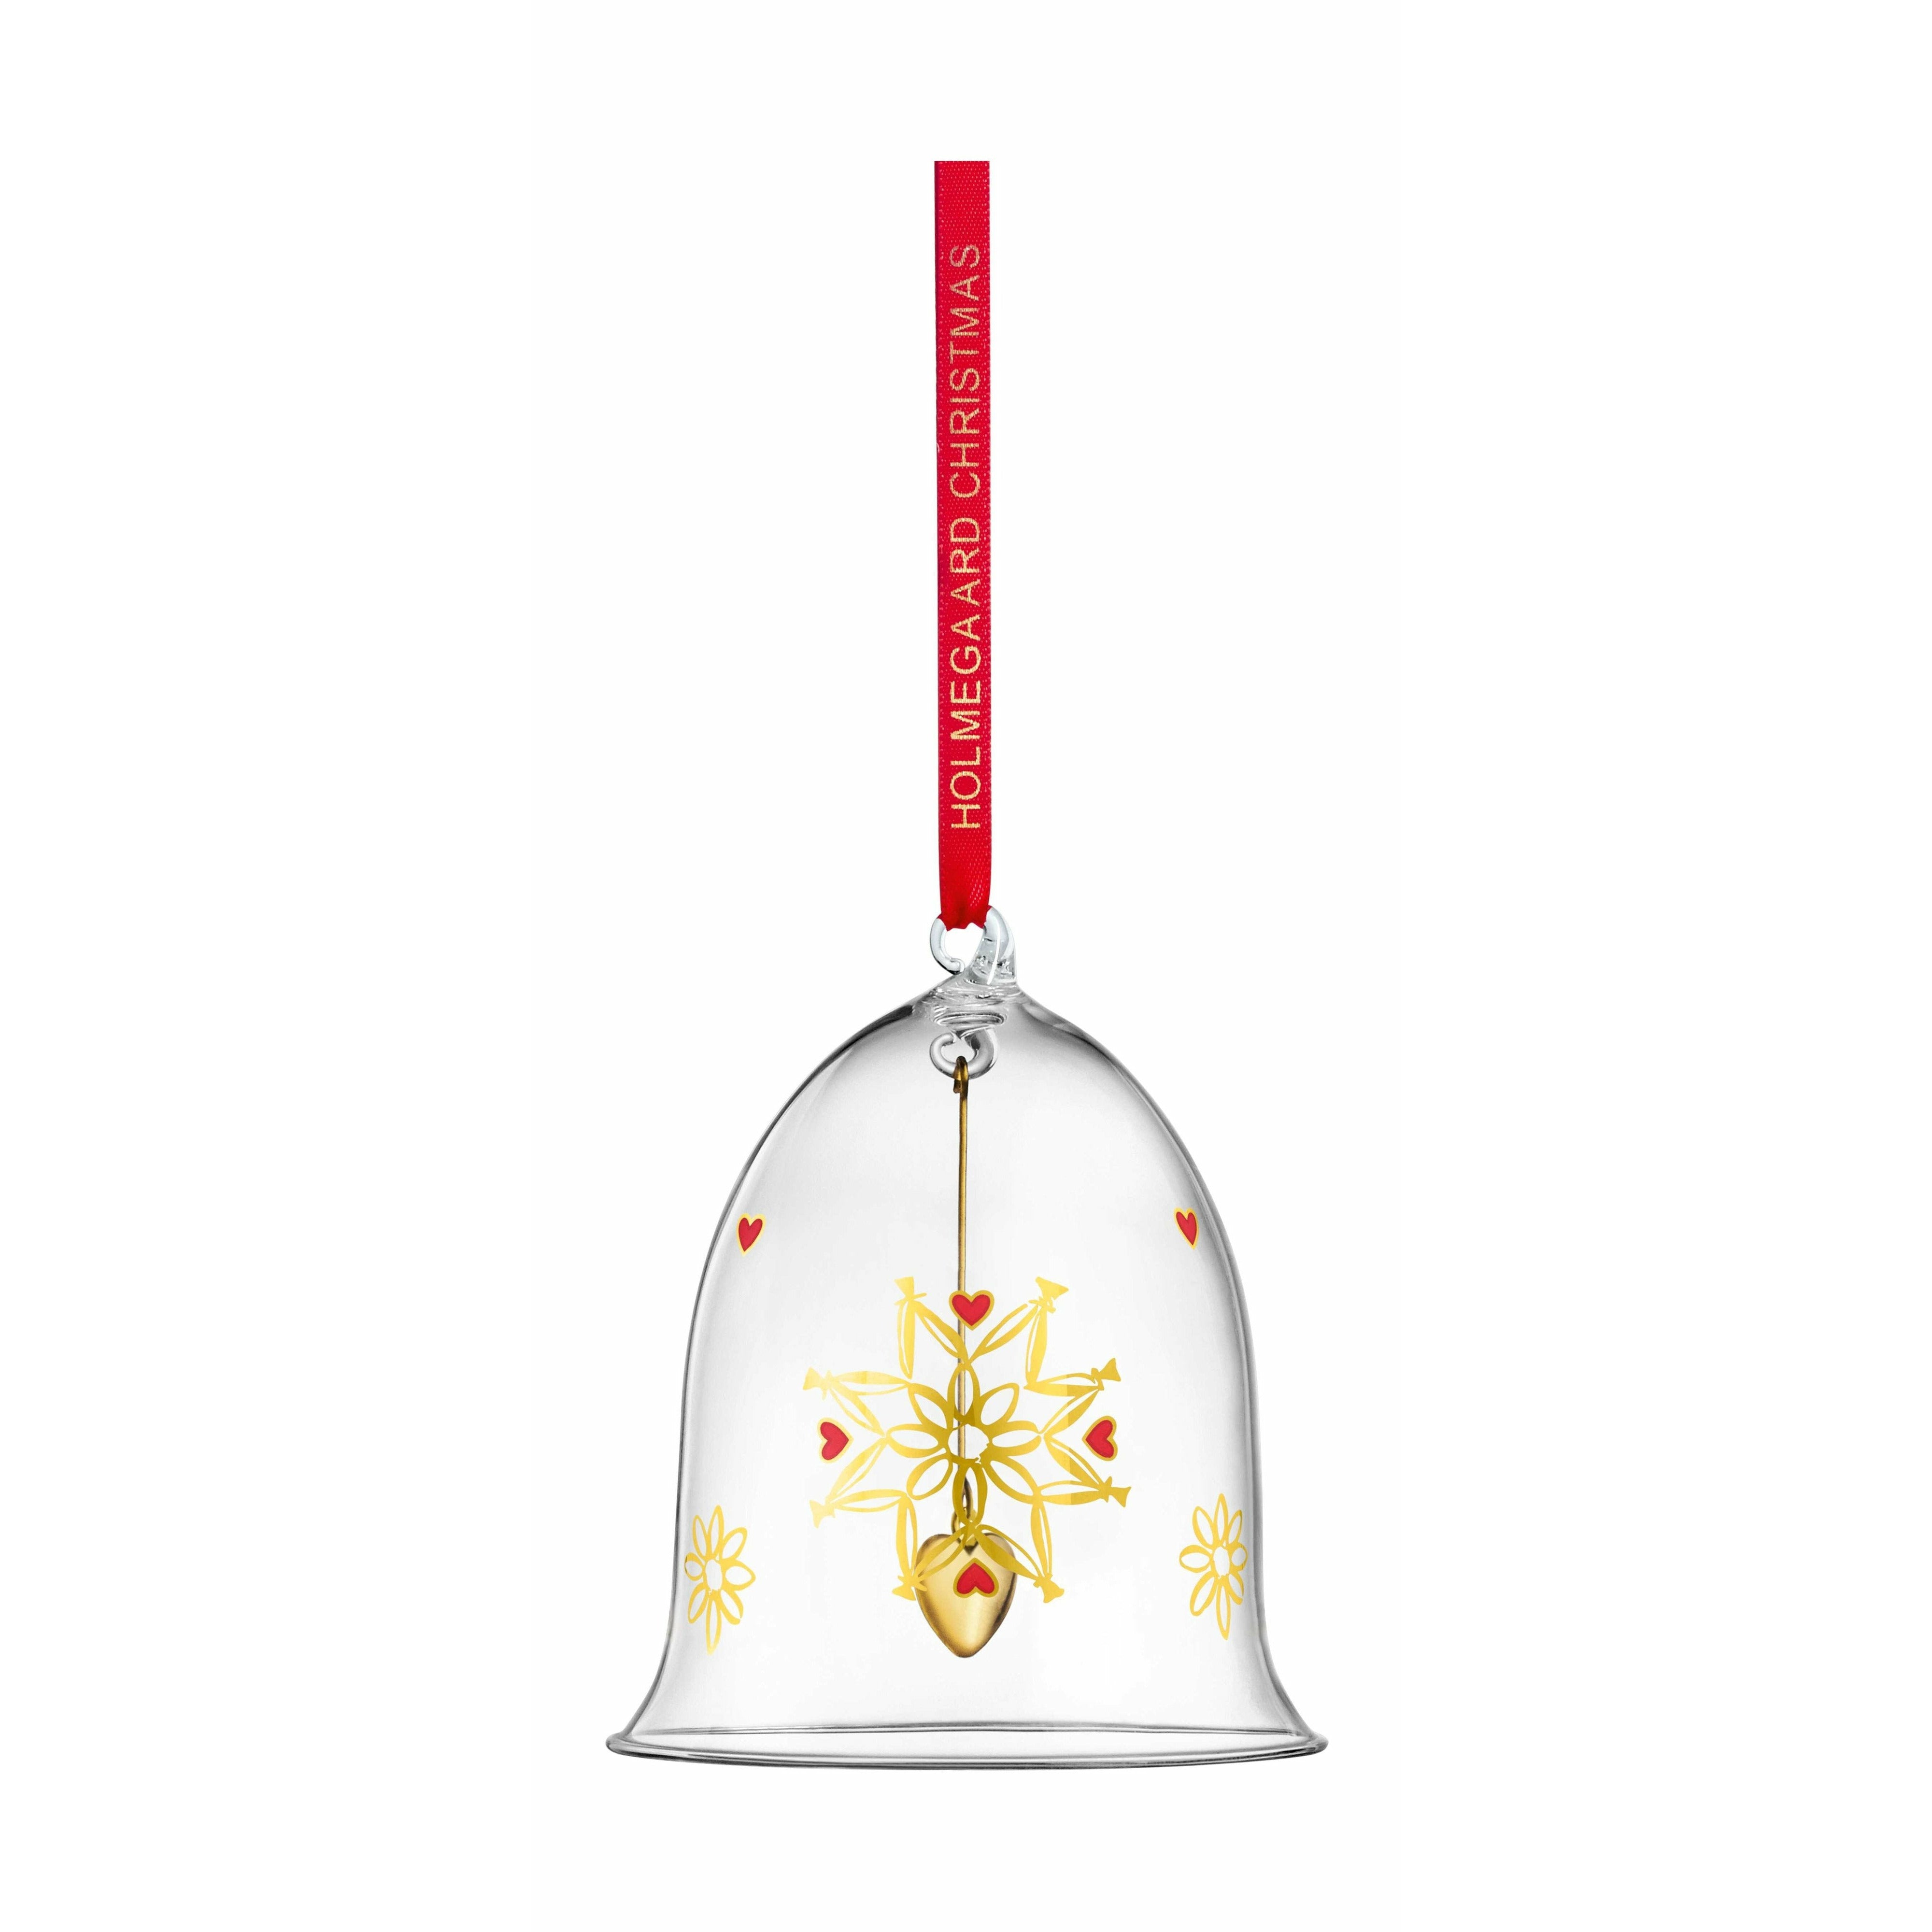 Holmegaard Ann Sofi Romme Christmas Bell, Large